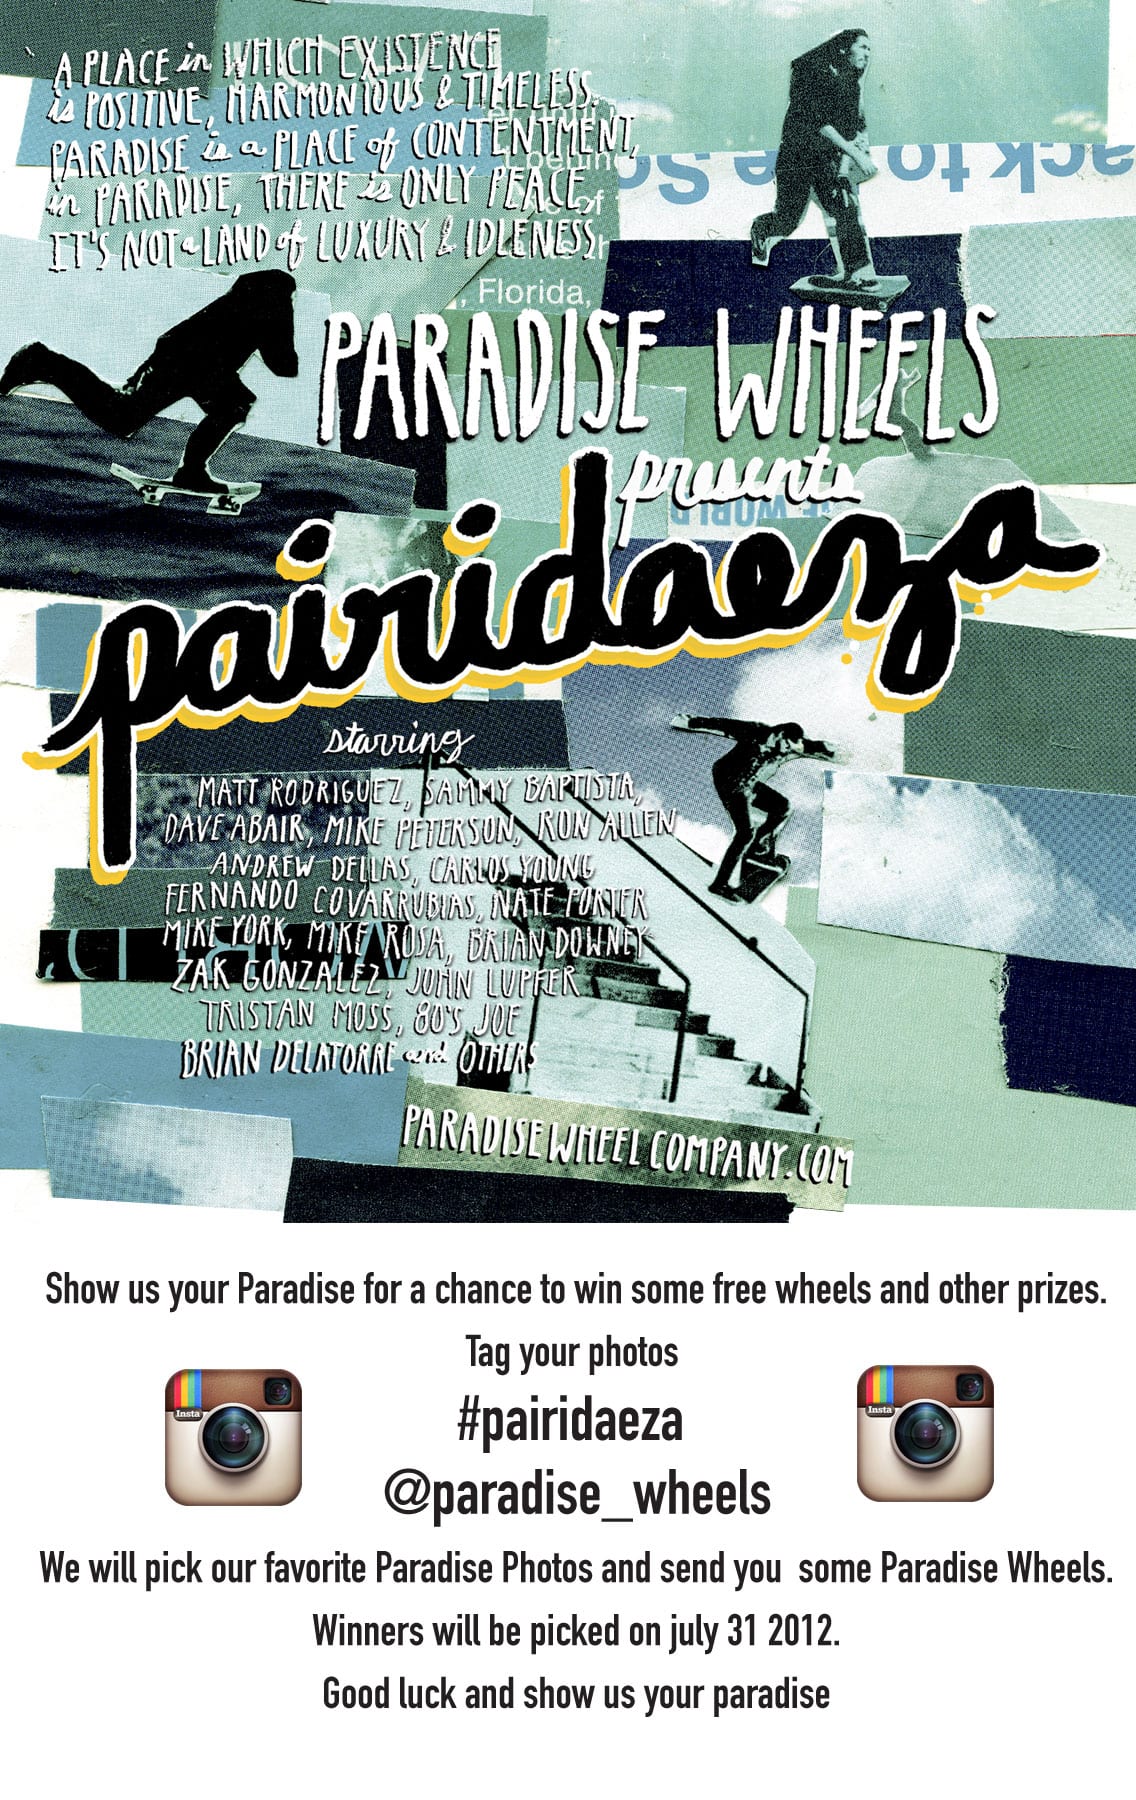 Paradise Wheels Presents Pairidaeza